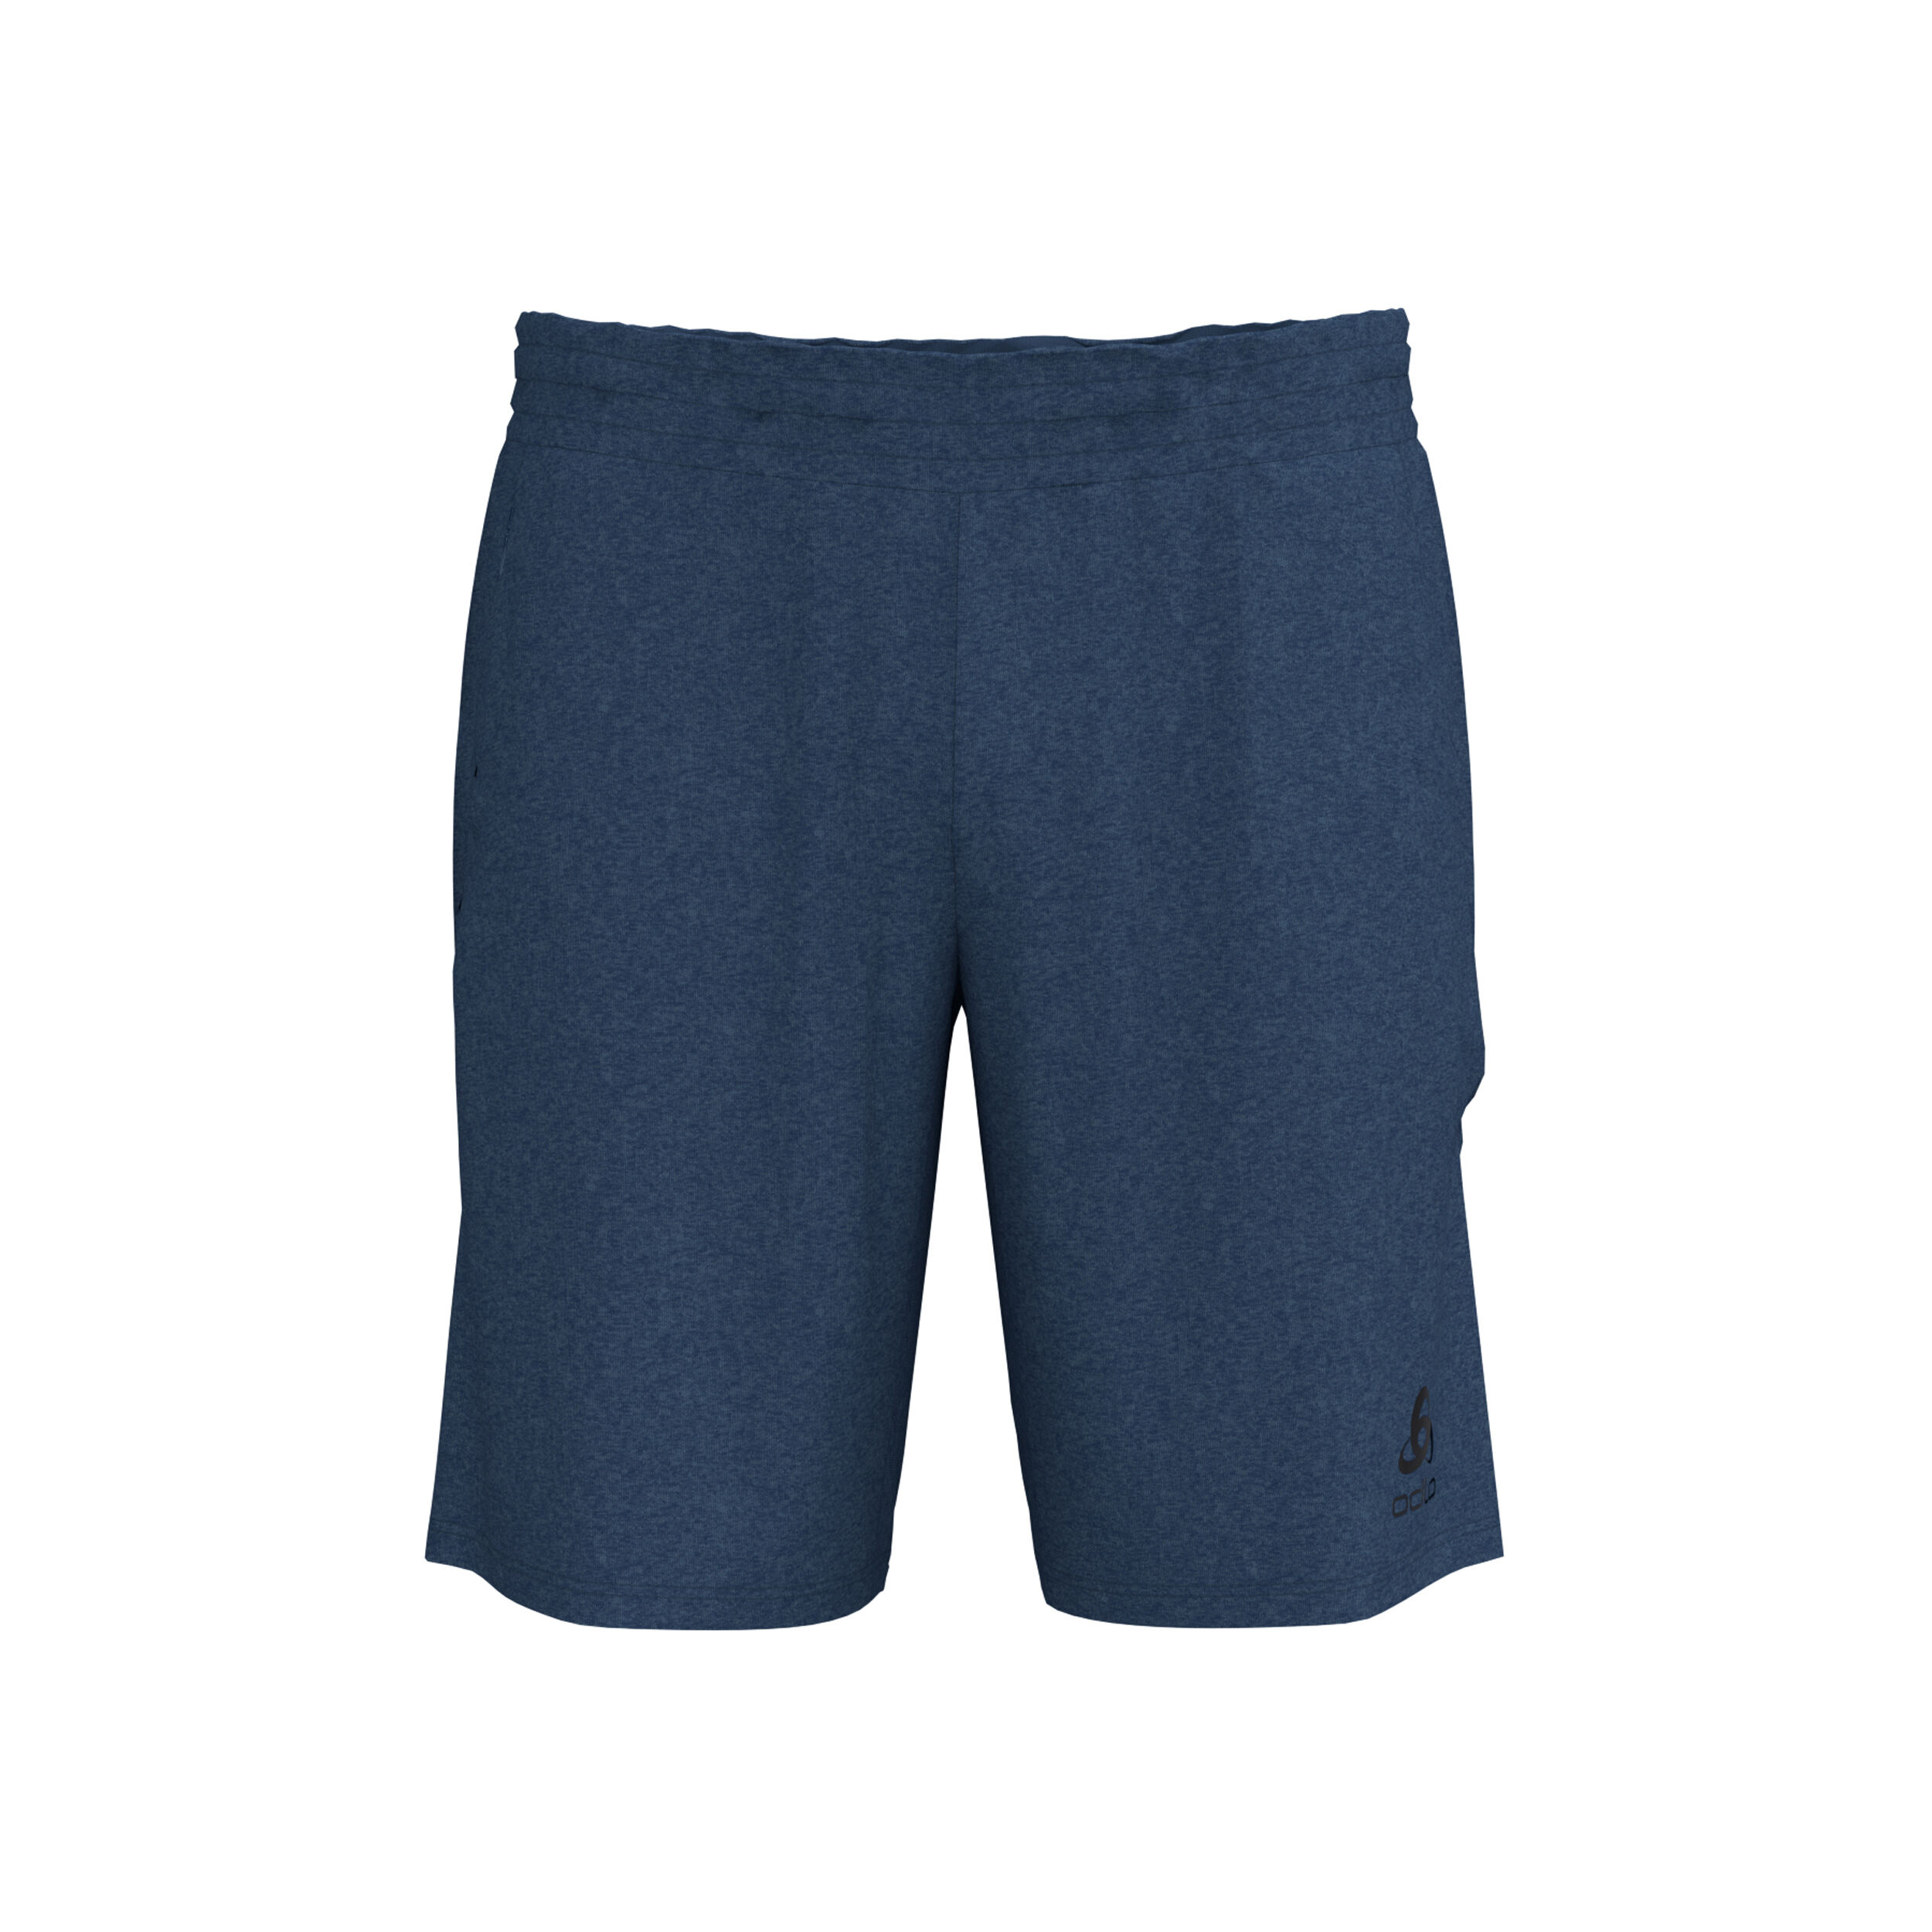 Odlo Herren millennium linencool pro split shorts  Shorts Blau S NEU 